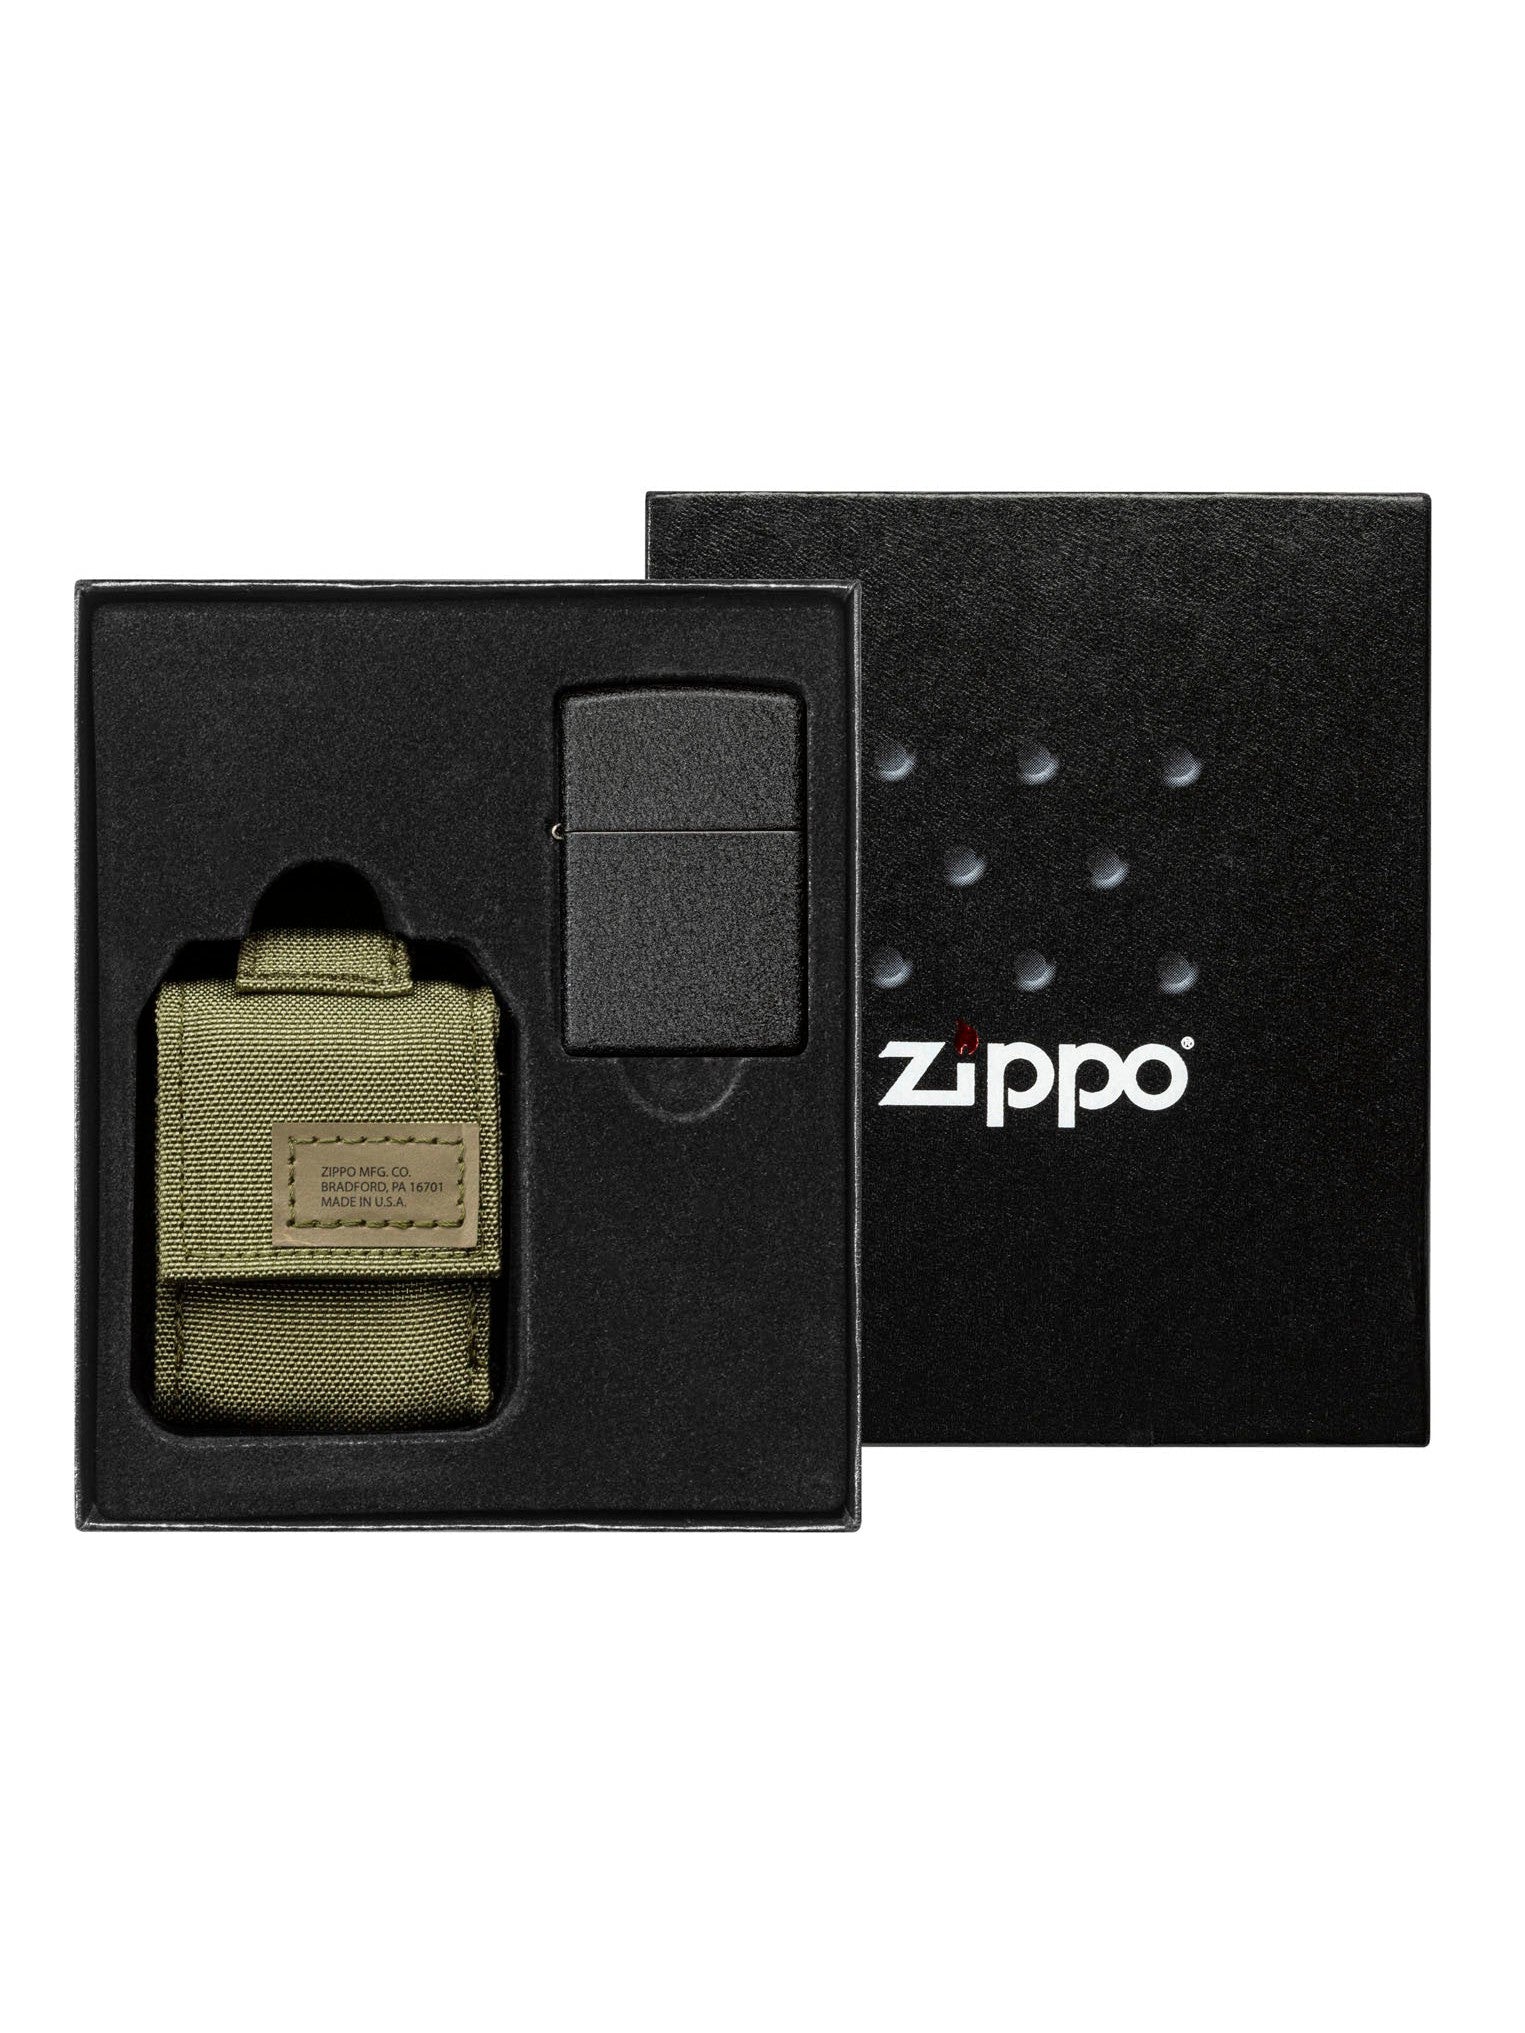 Sheesha_ Hub - LV zippo Gas lighter Dm for price